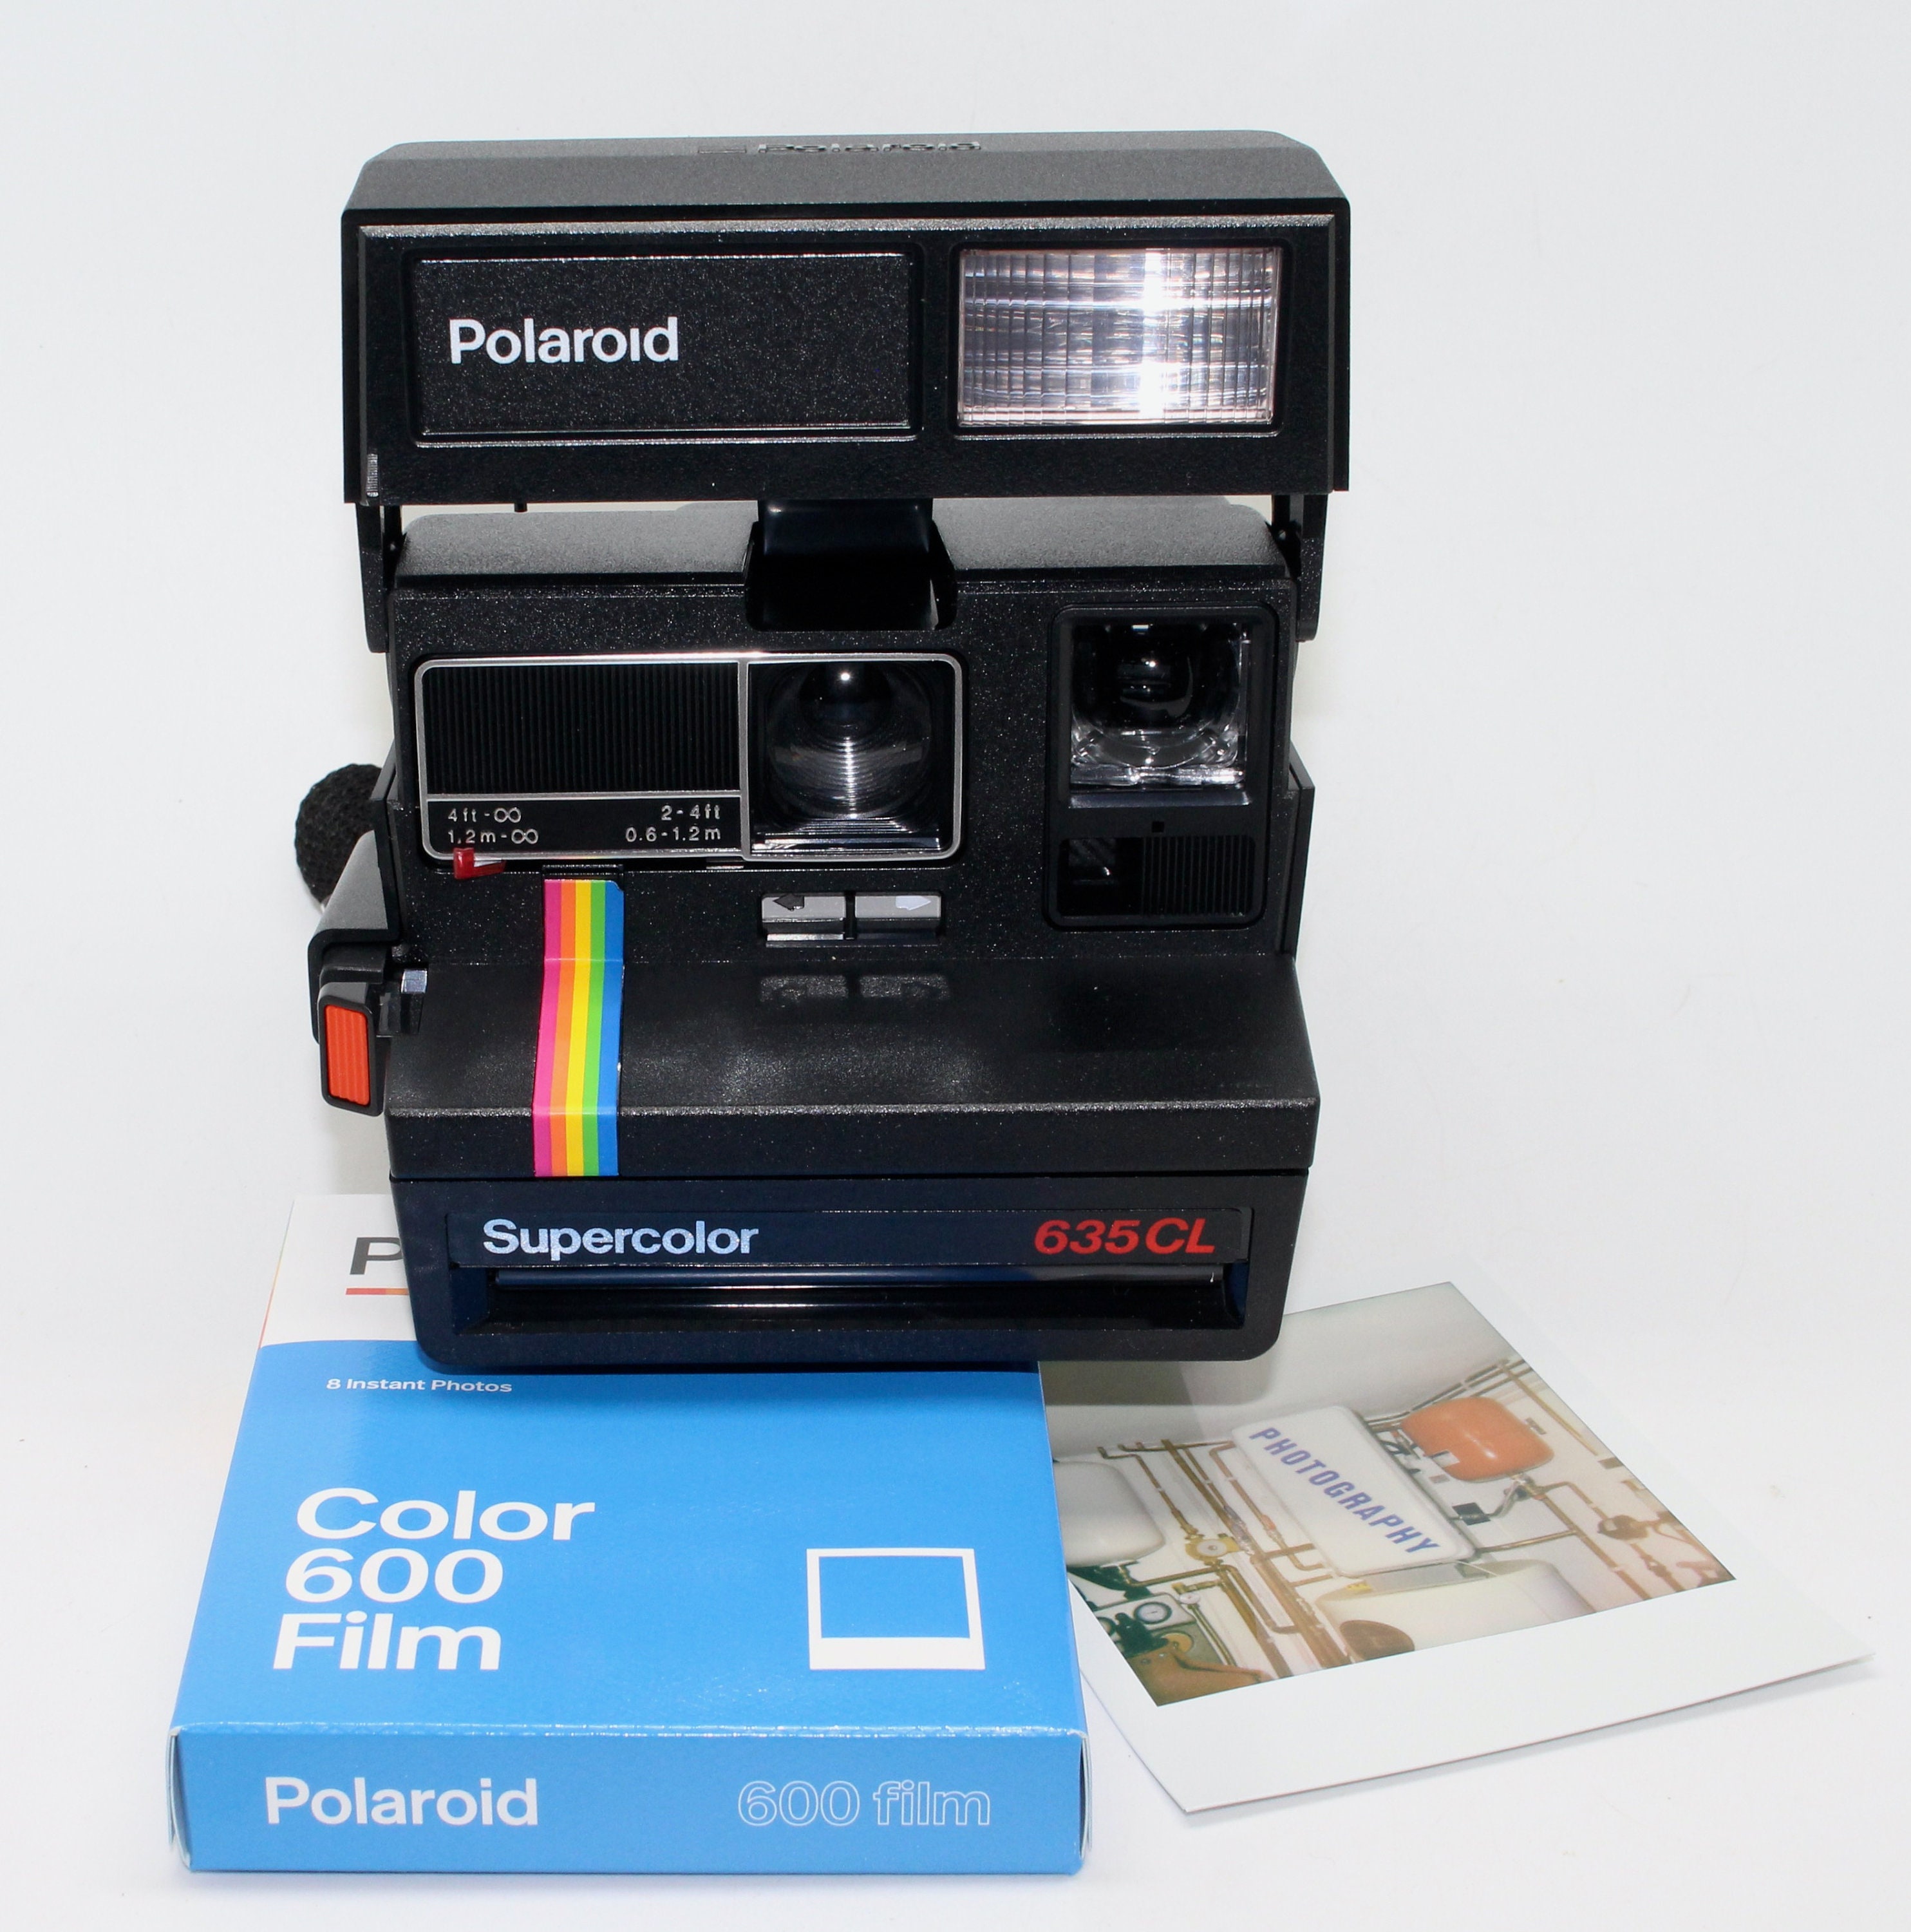 Polaroid Supercolor 635 - Special Edition - Includes original box